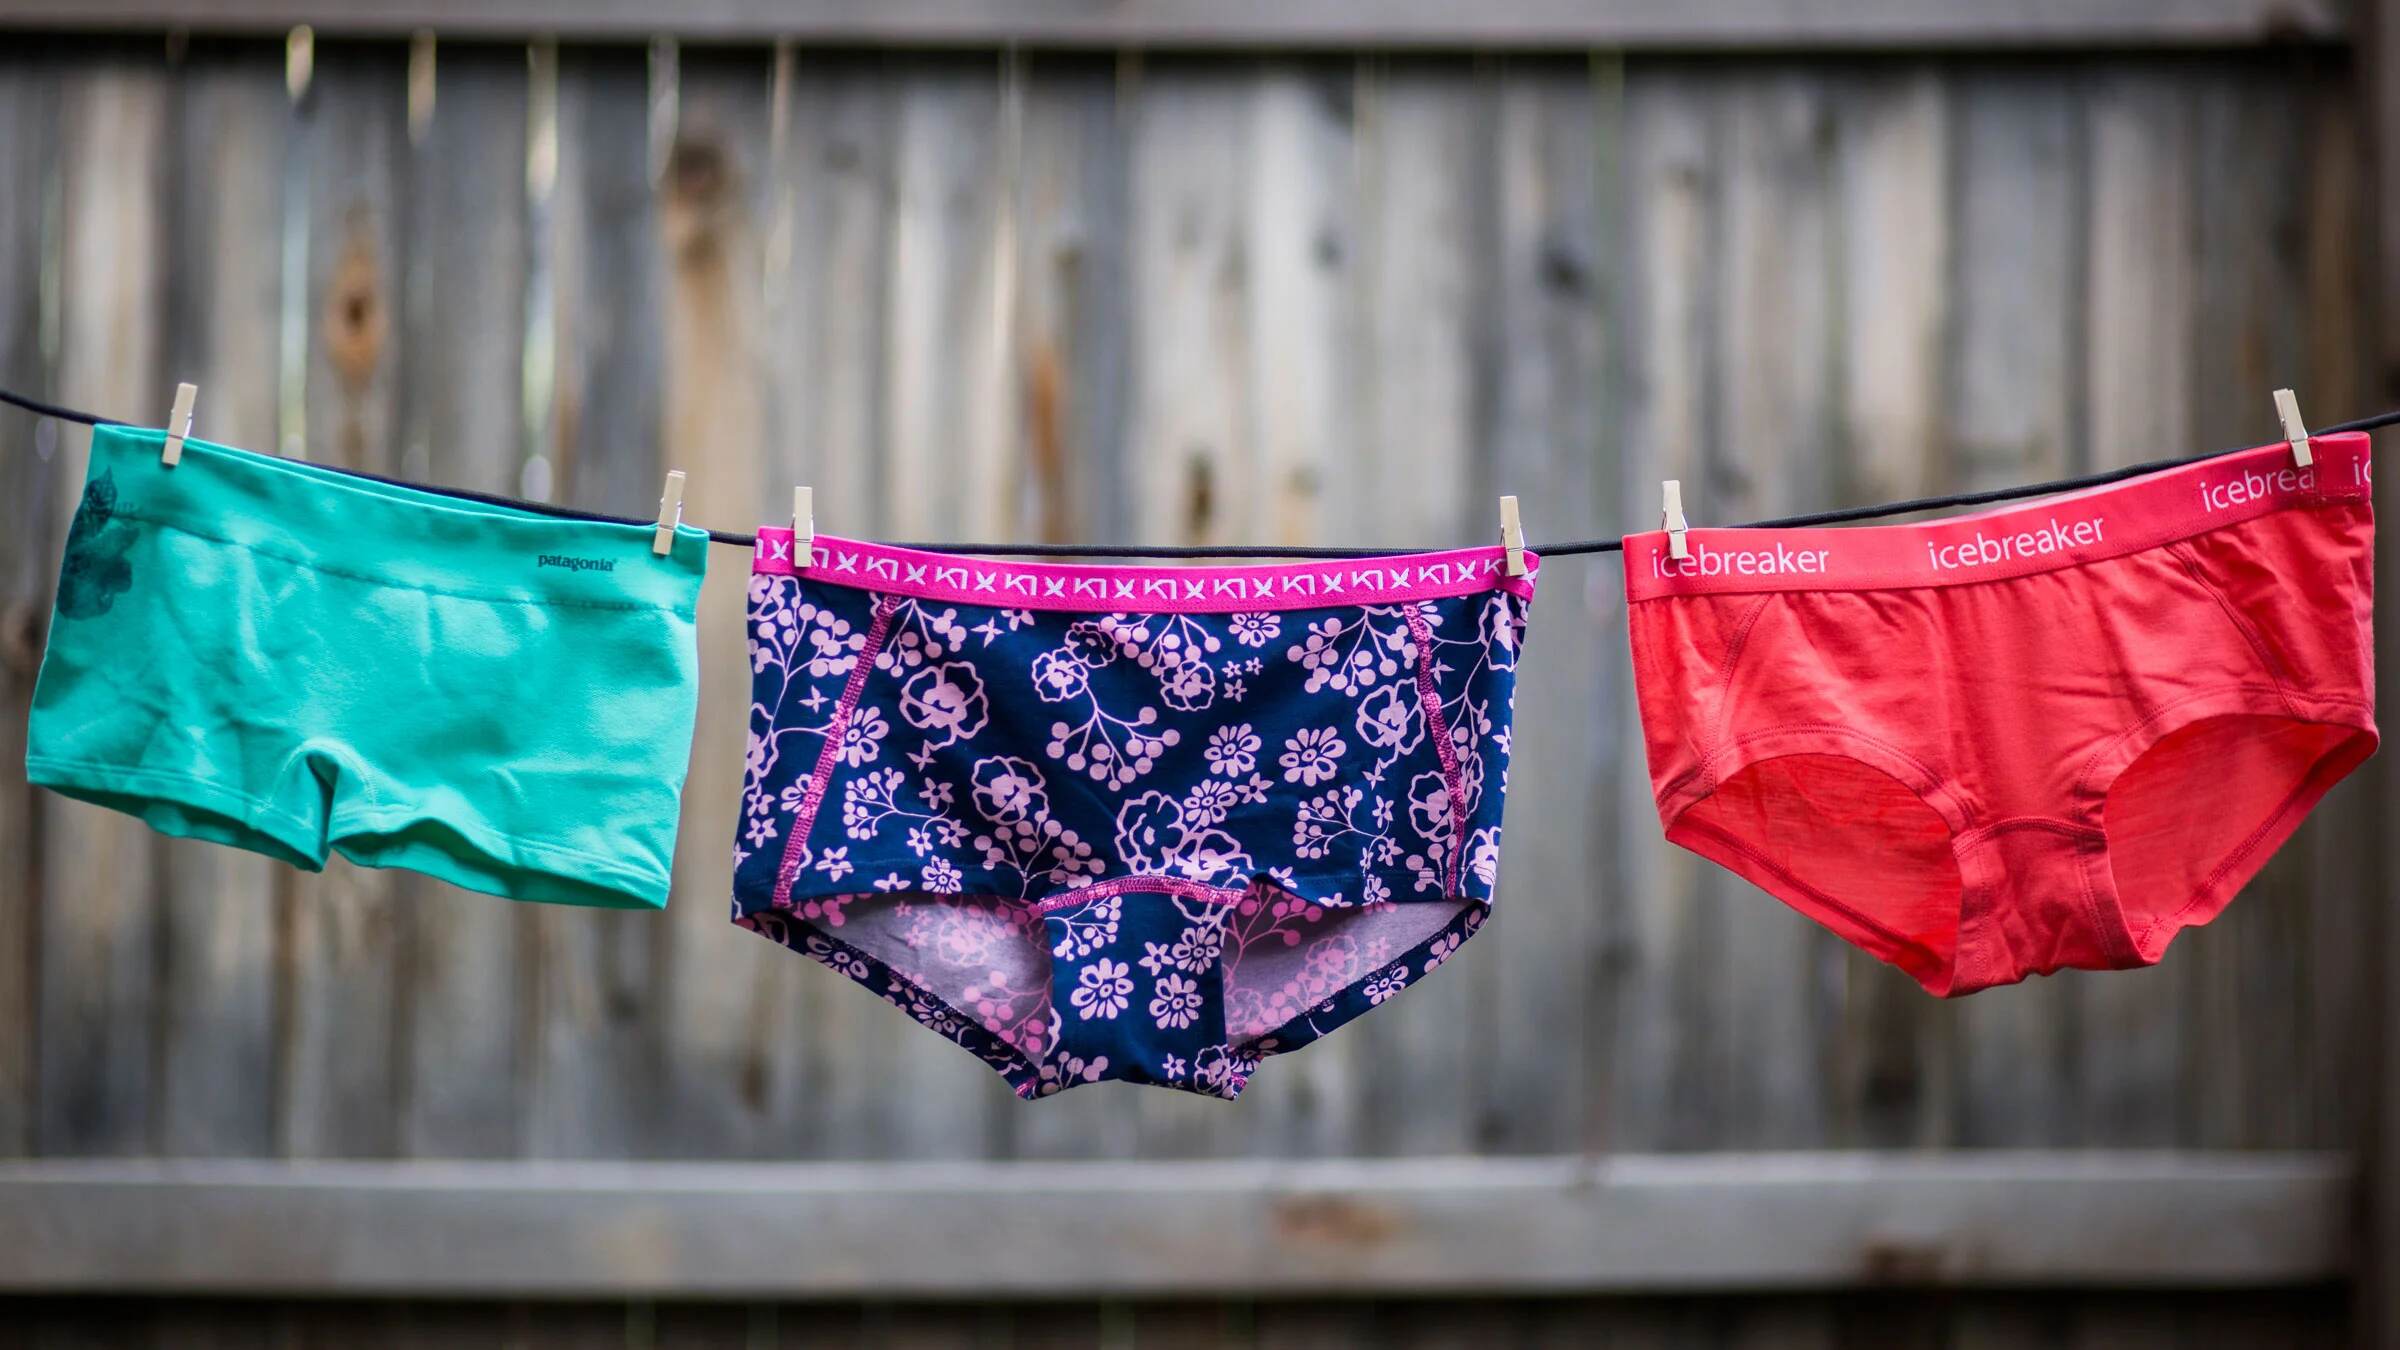 MOLASUS WOMEN'S 100 Cotton Underwear Soft, Multicolored-4 Pack